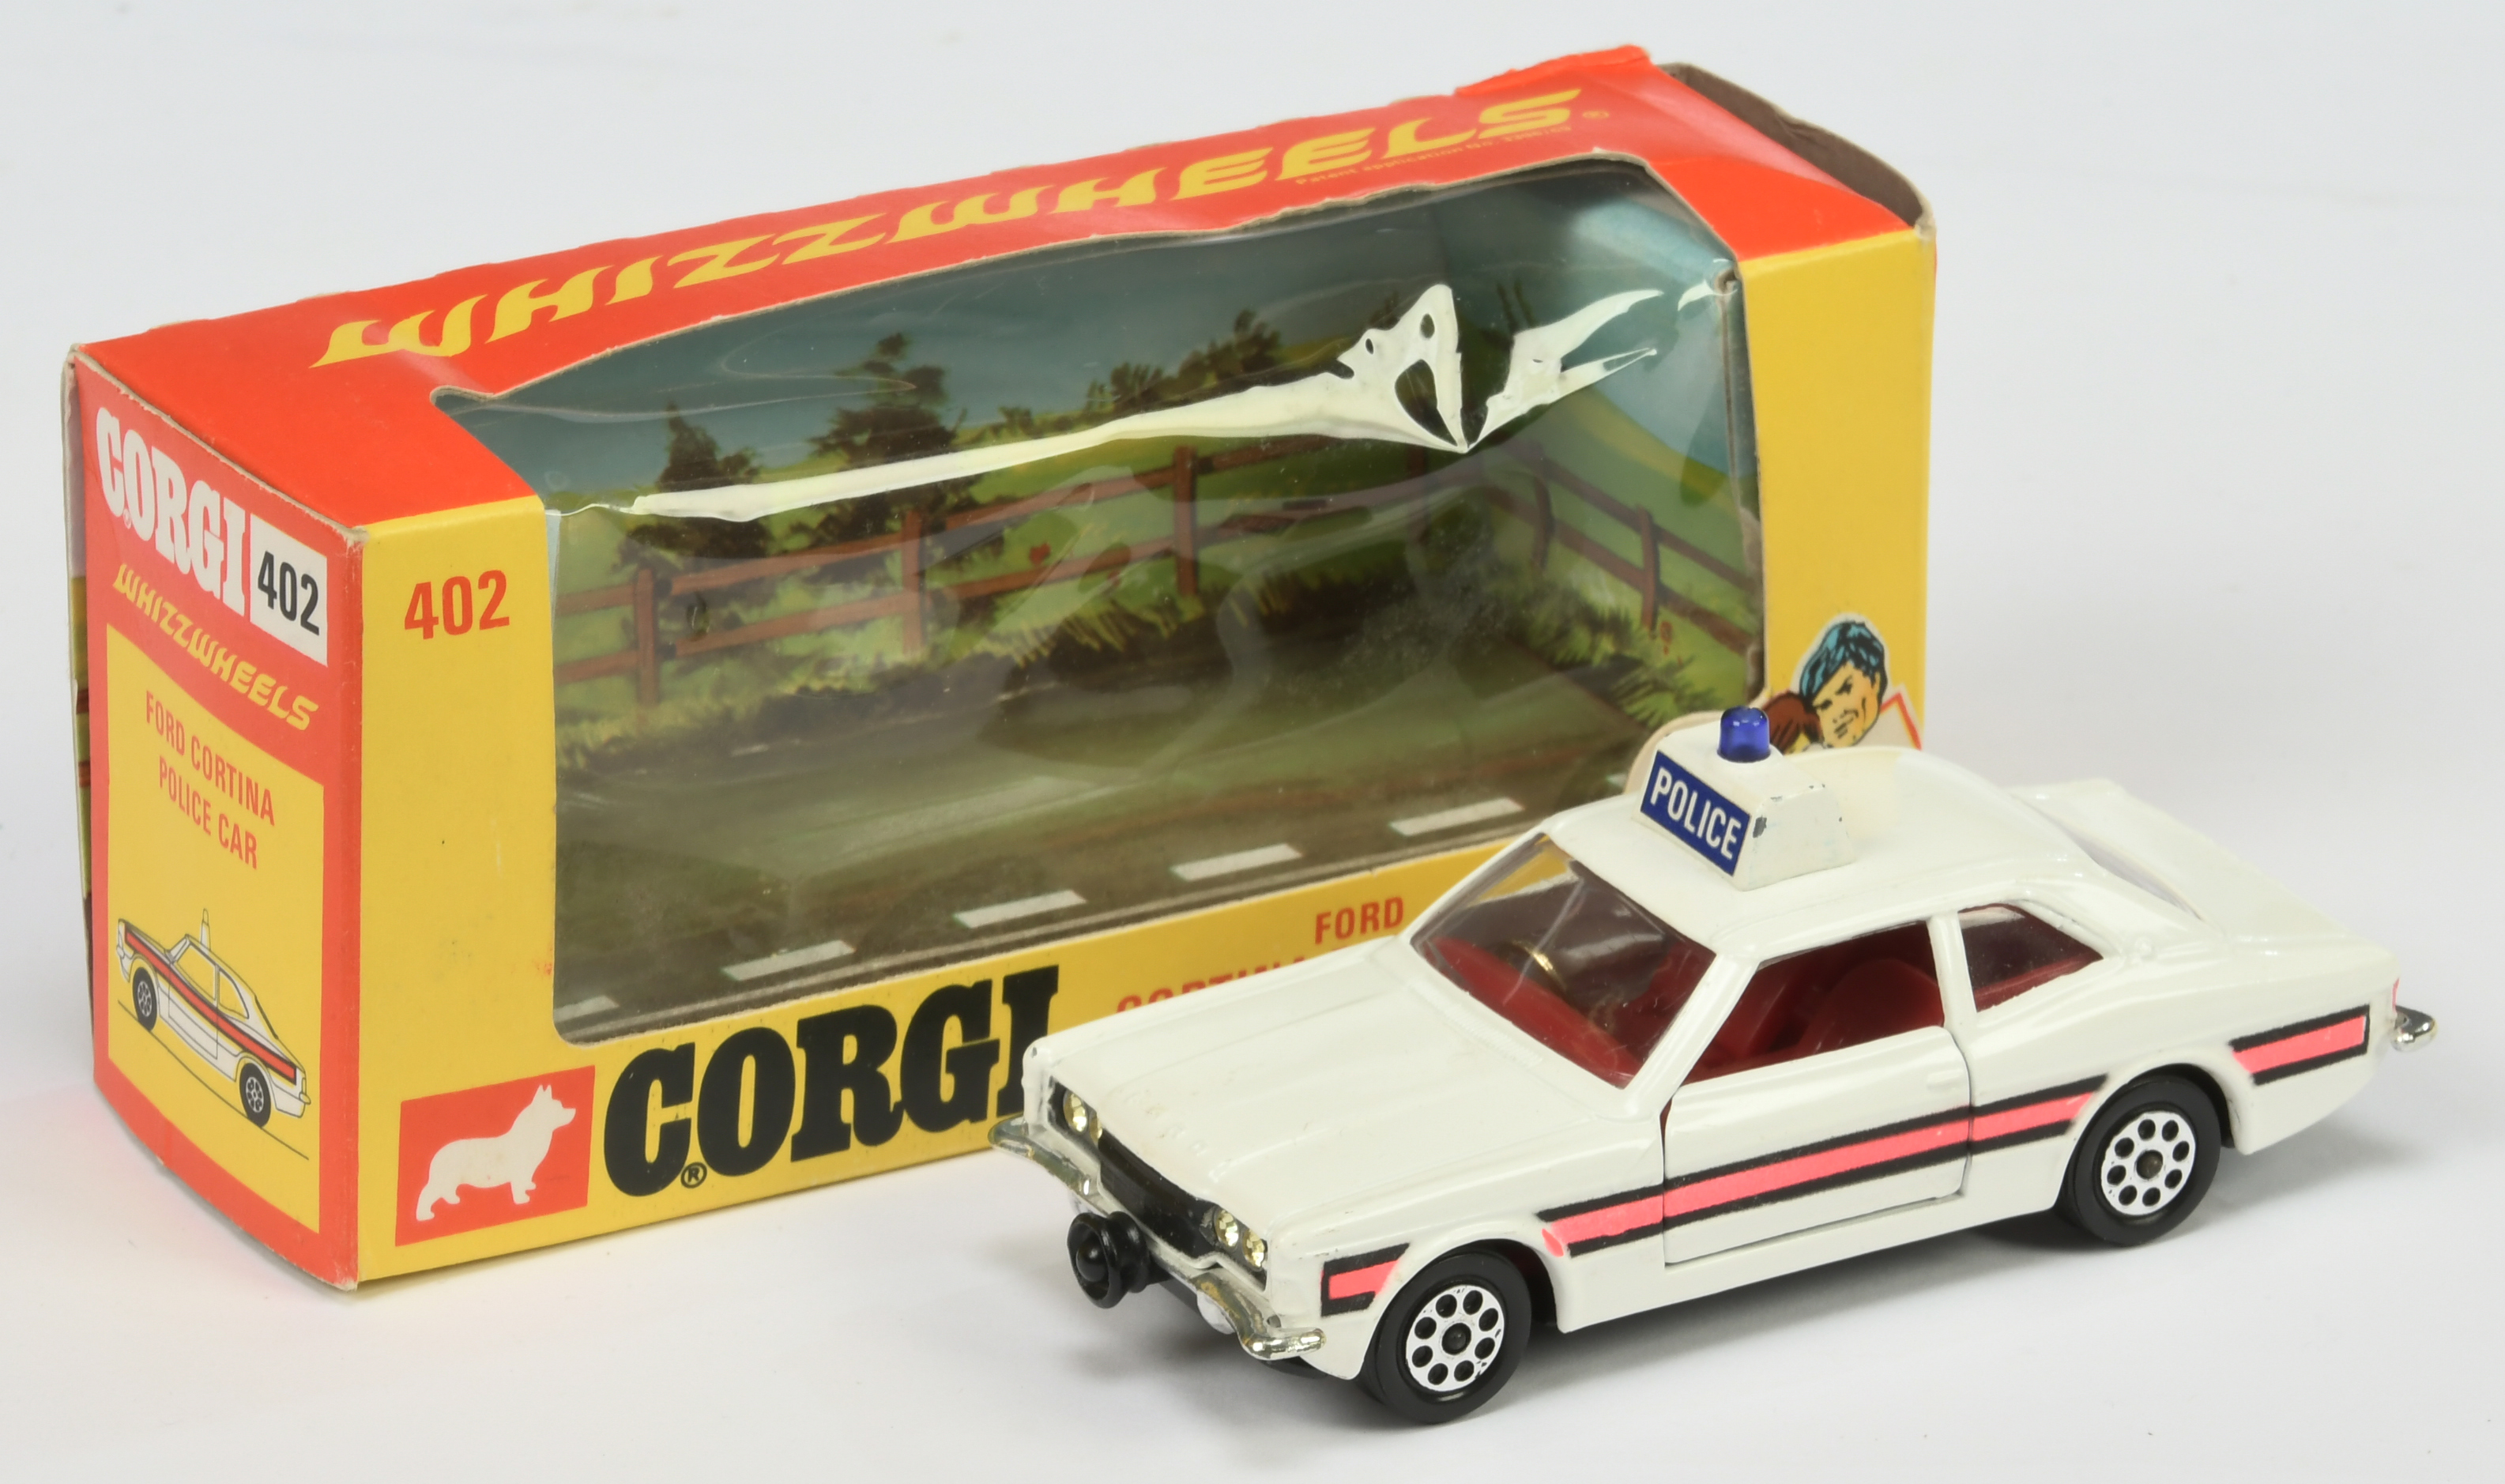 Corgi Toys 402 Ford Cortina "Police" Car - White body, red interior, black base, roof box and lig...